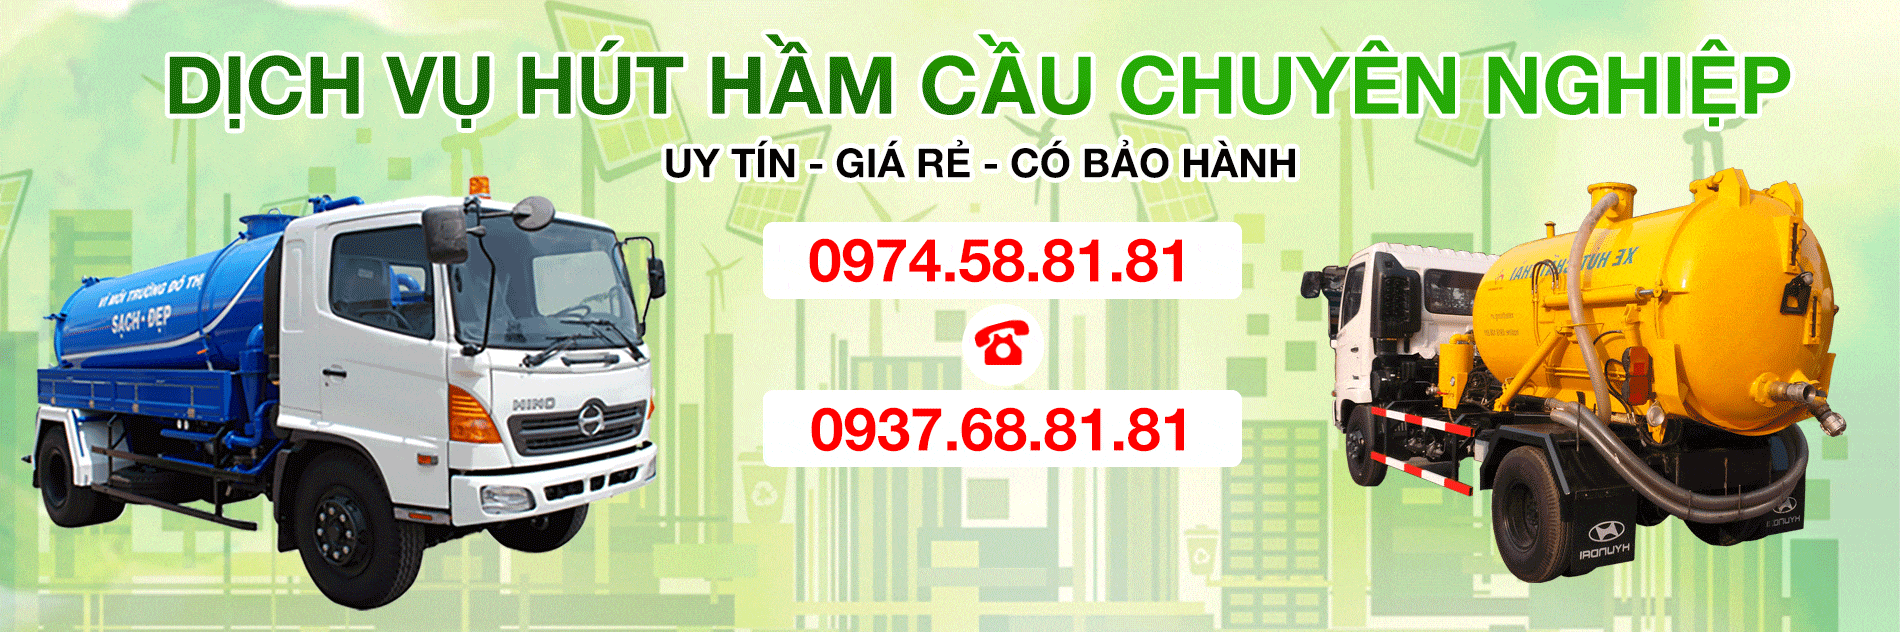 cong-ty-hut-ham-biogas-uy-tin